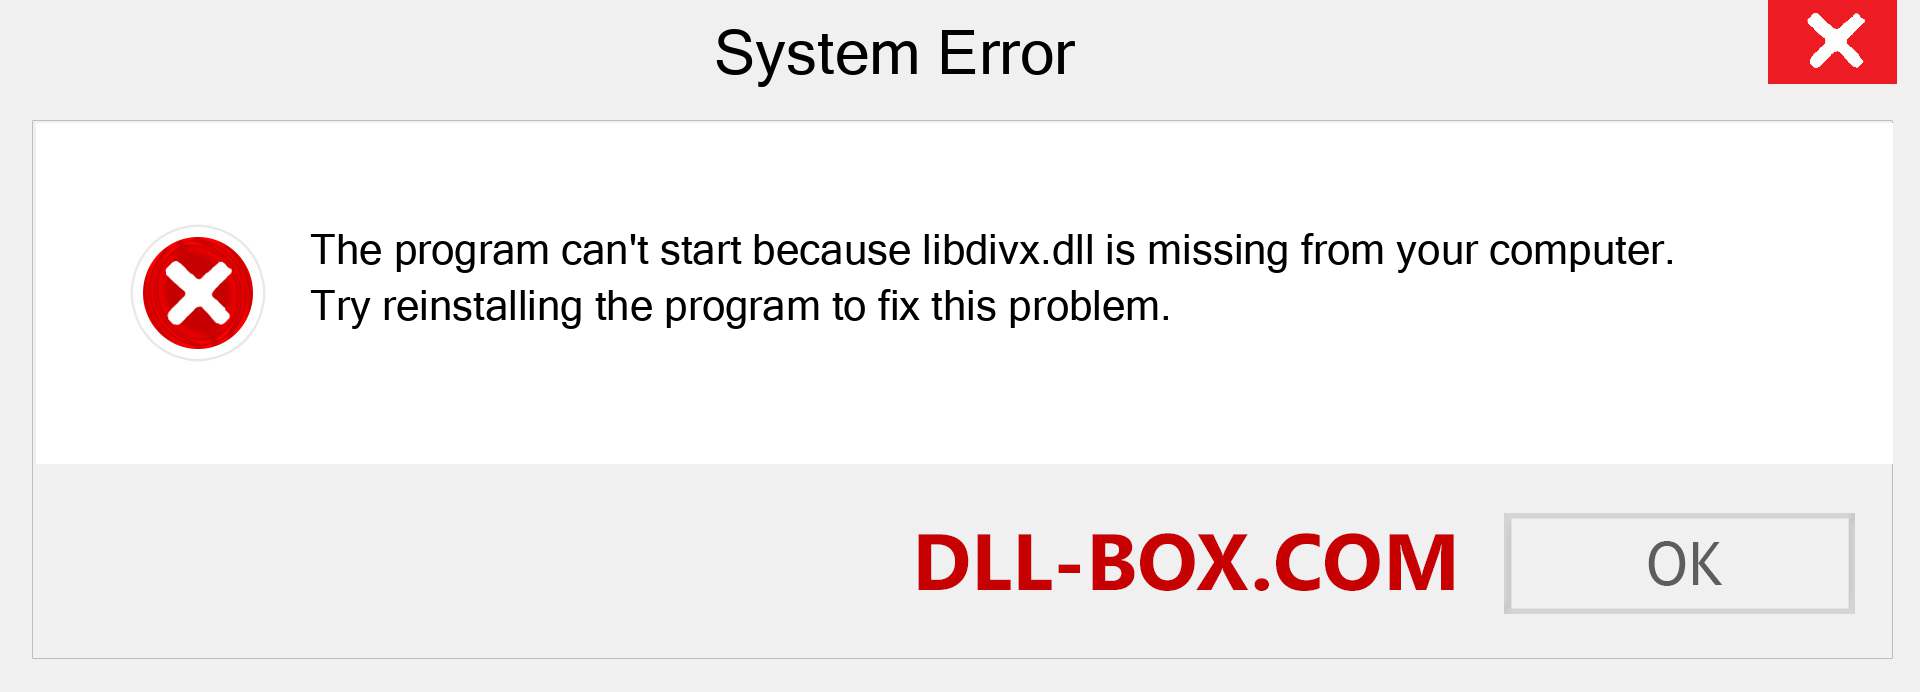  libdivx.dll file is missing?. Download for Windows 7, 8, 10 - Fix  libdivx dll Missing Error on Windows, photos, images